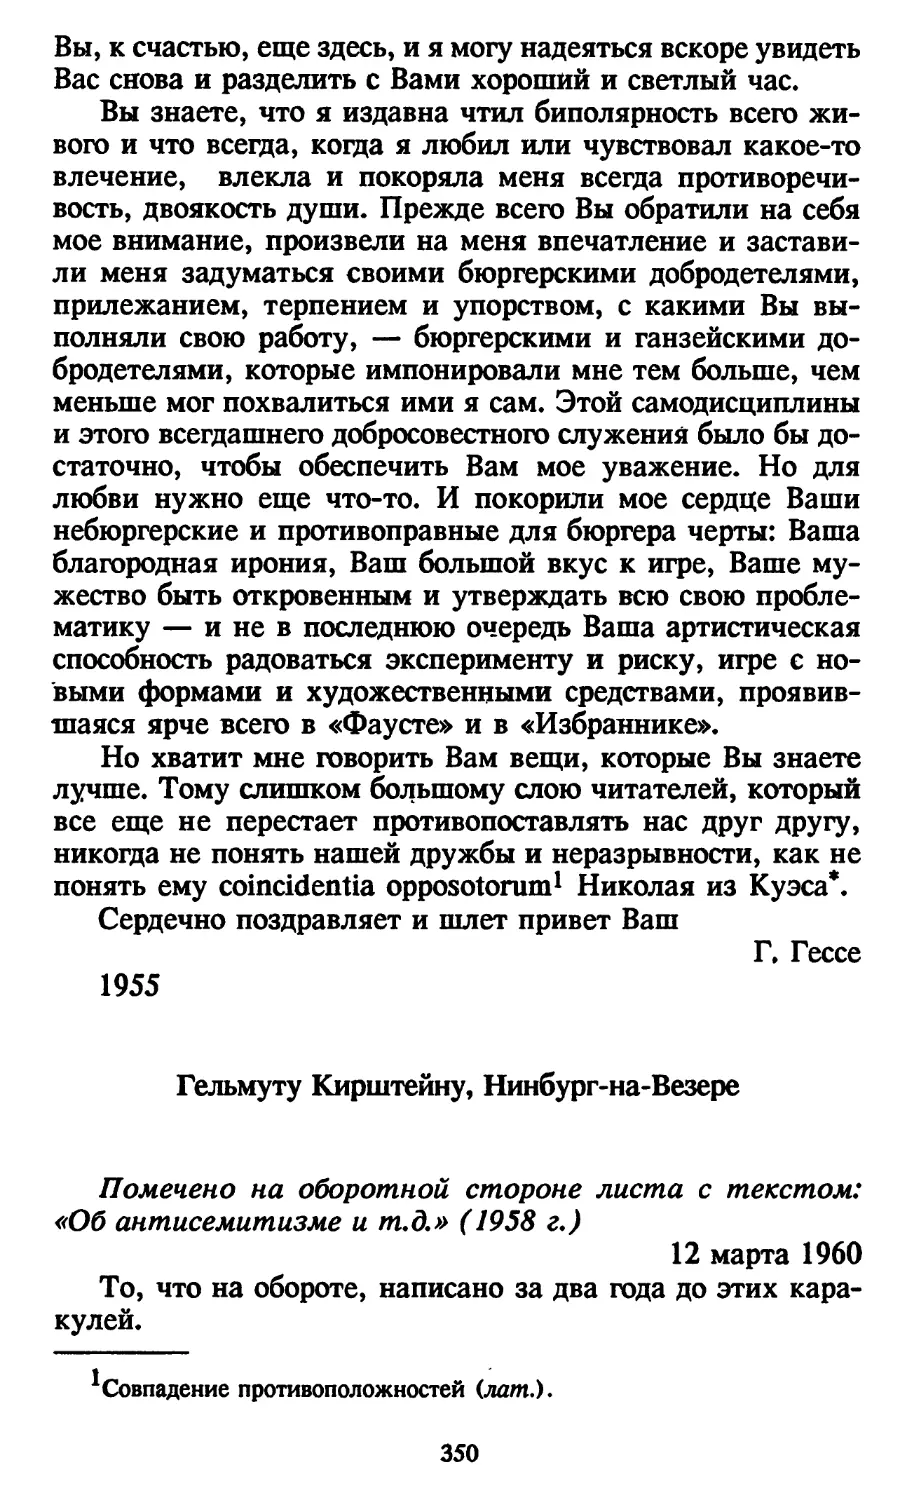 Гельмуту Кирштейну. 12 марта 1960